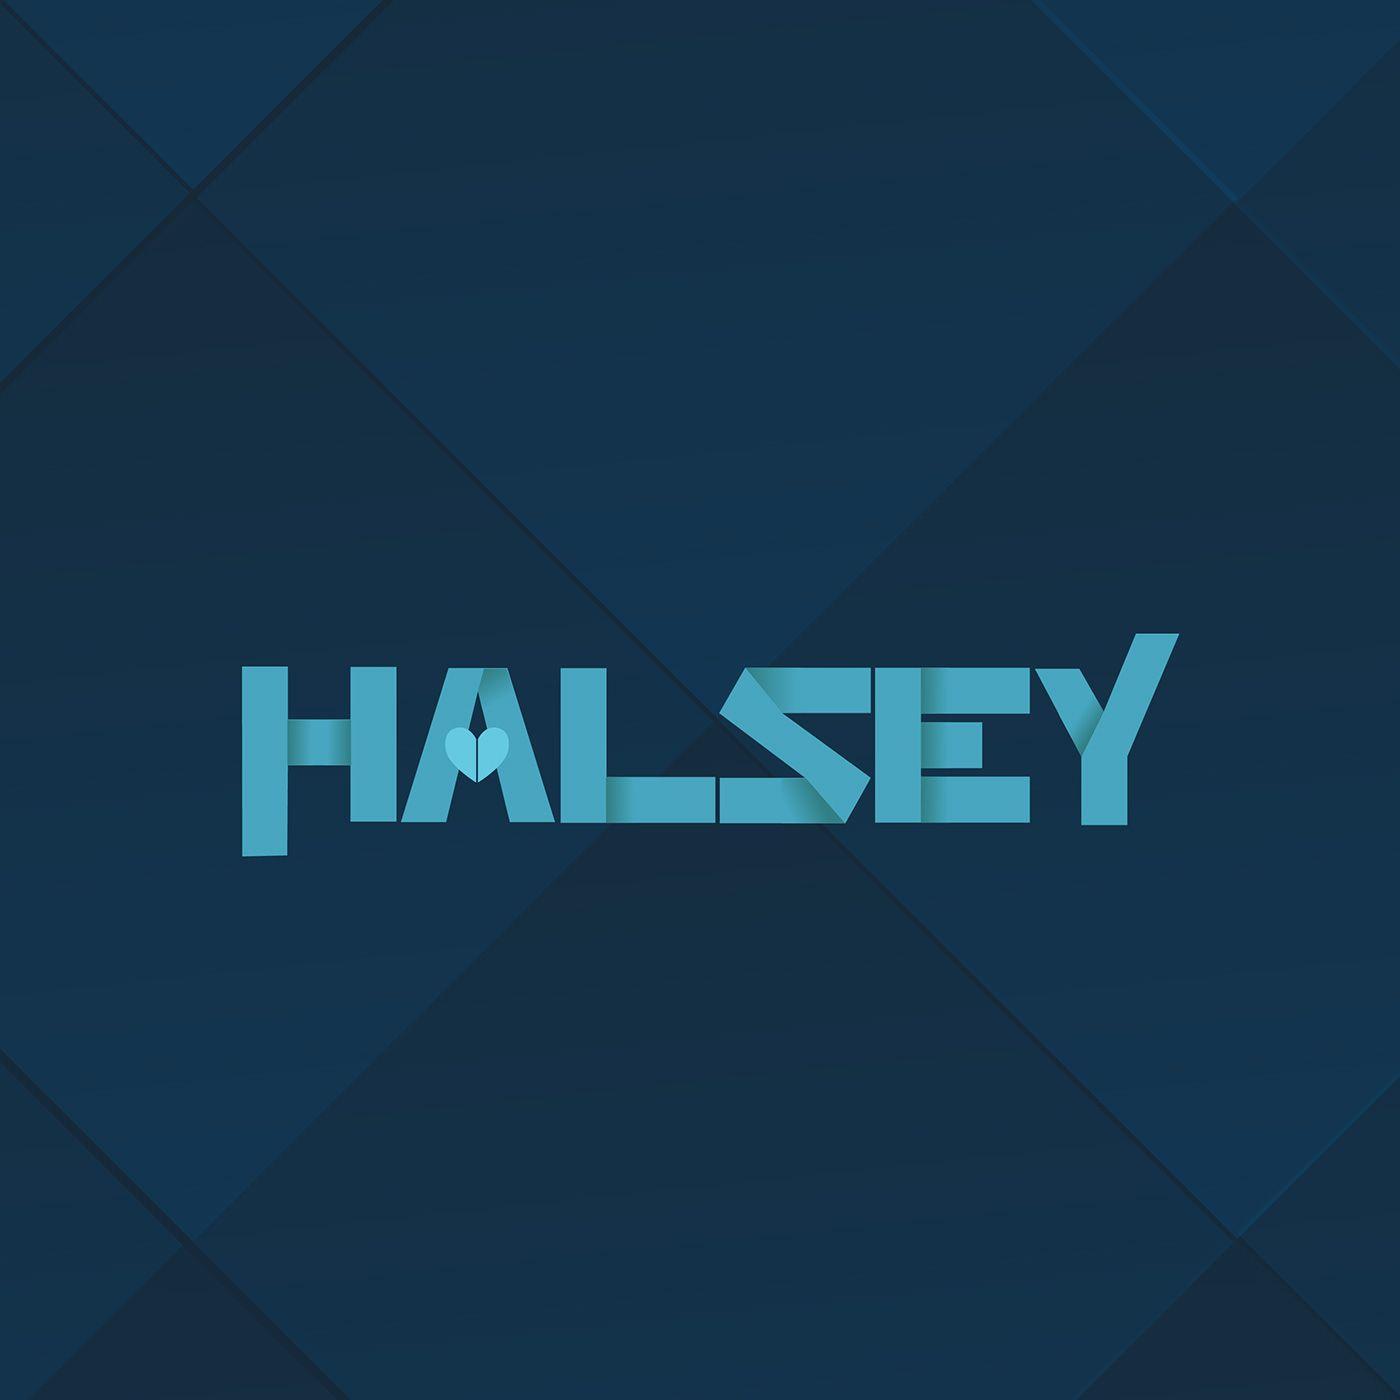 Halsey Logo - Halsey Logo Concept